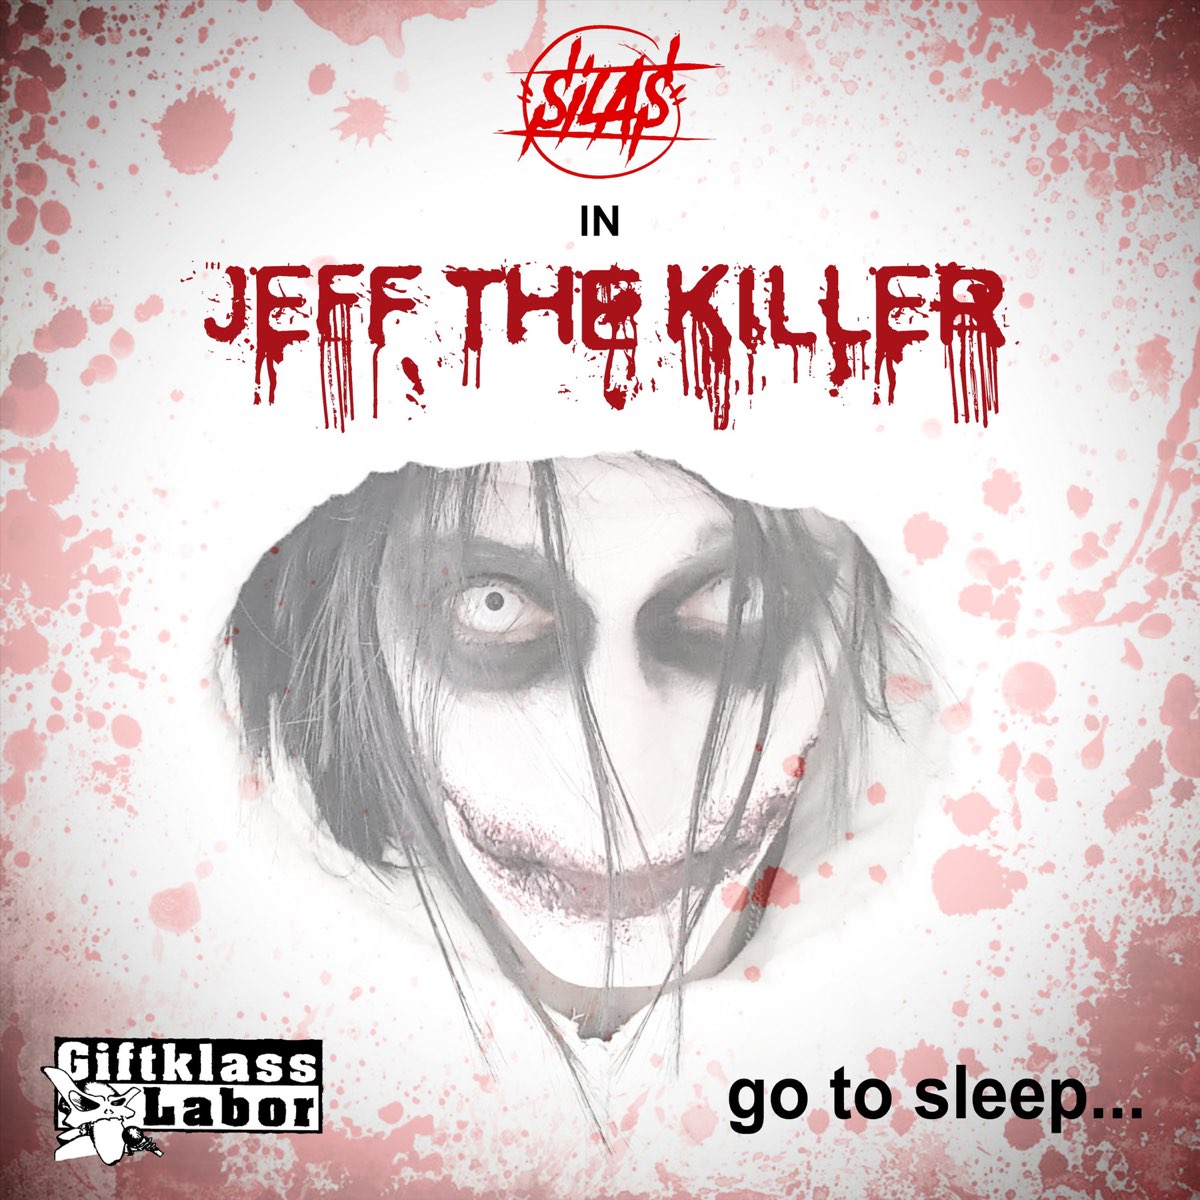 JEFF THE KILLER – Song by Elevenfinger – Apple Music